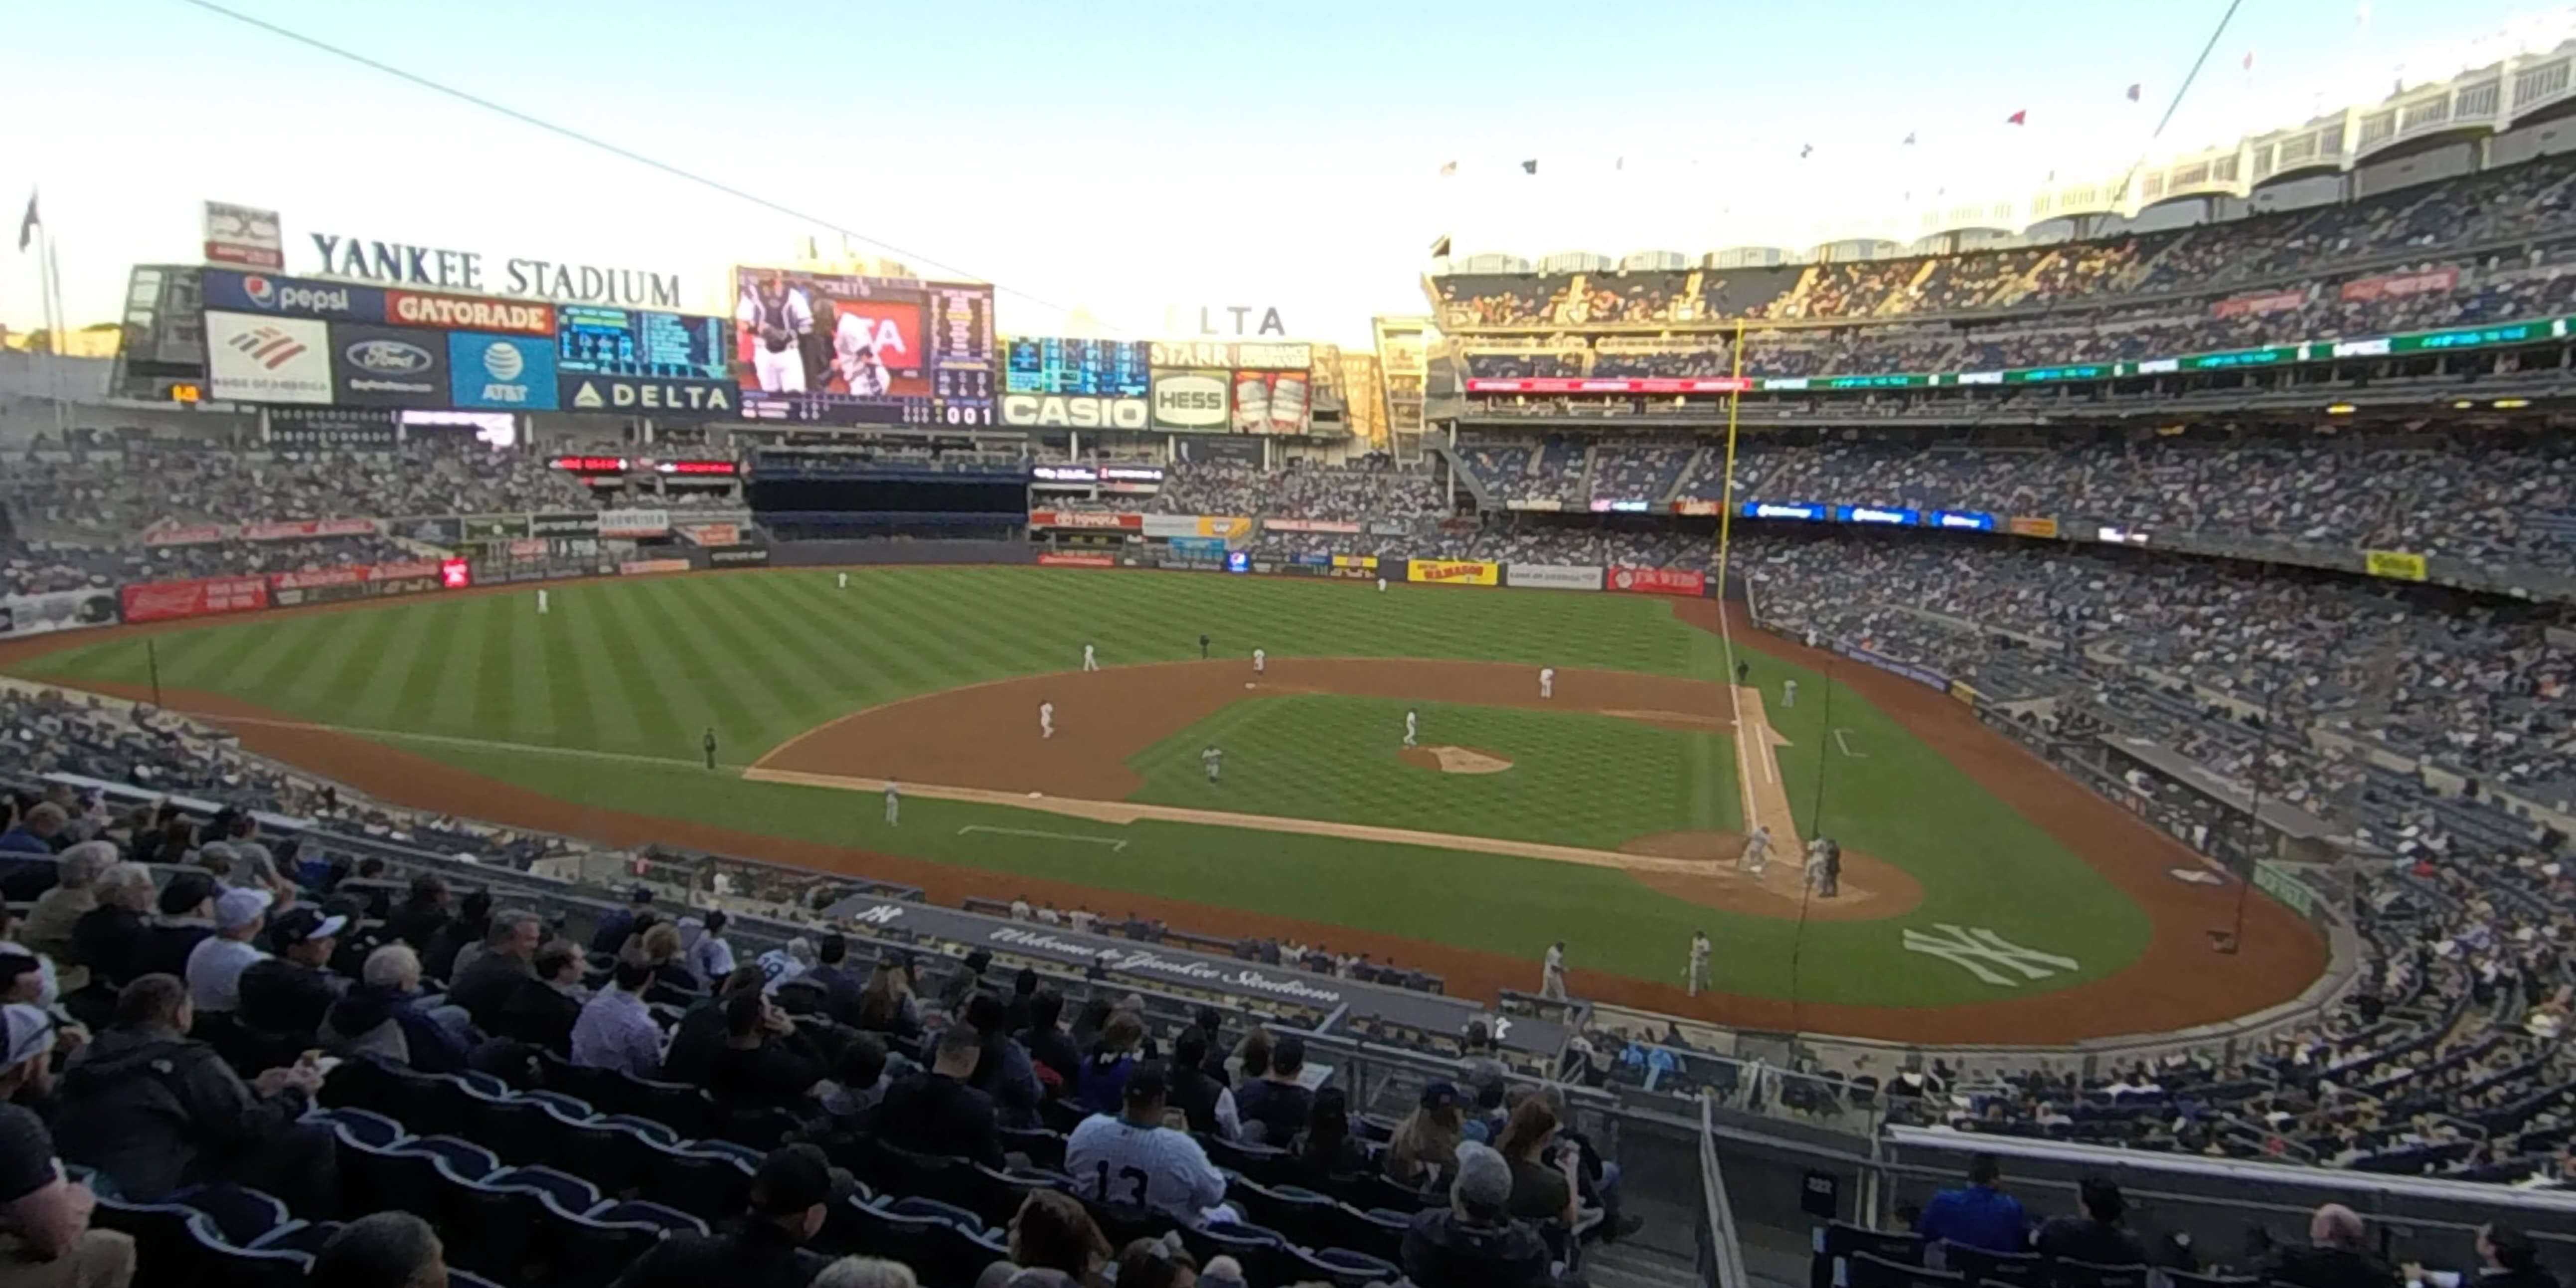 section 222 panoramic seat view  for baseball - yankee stadium